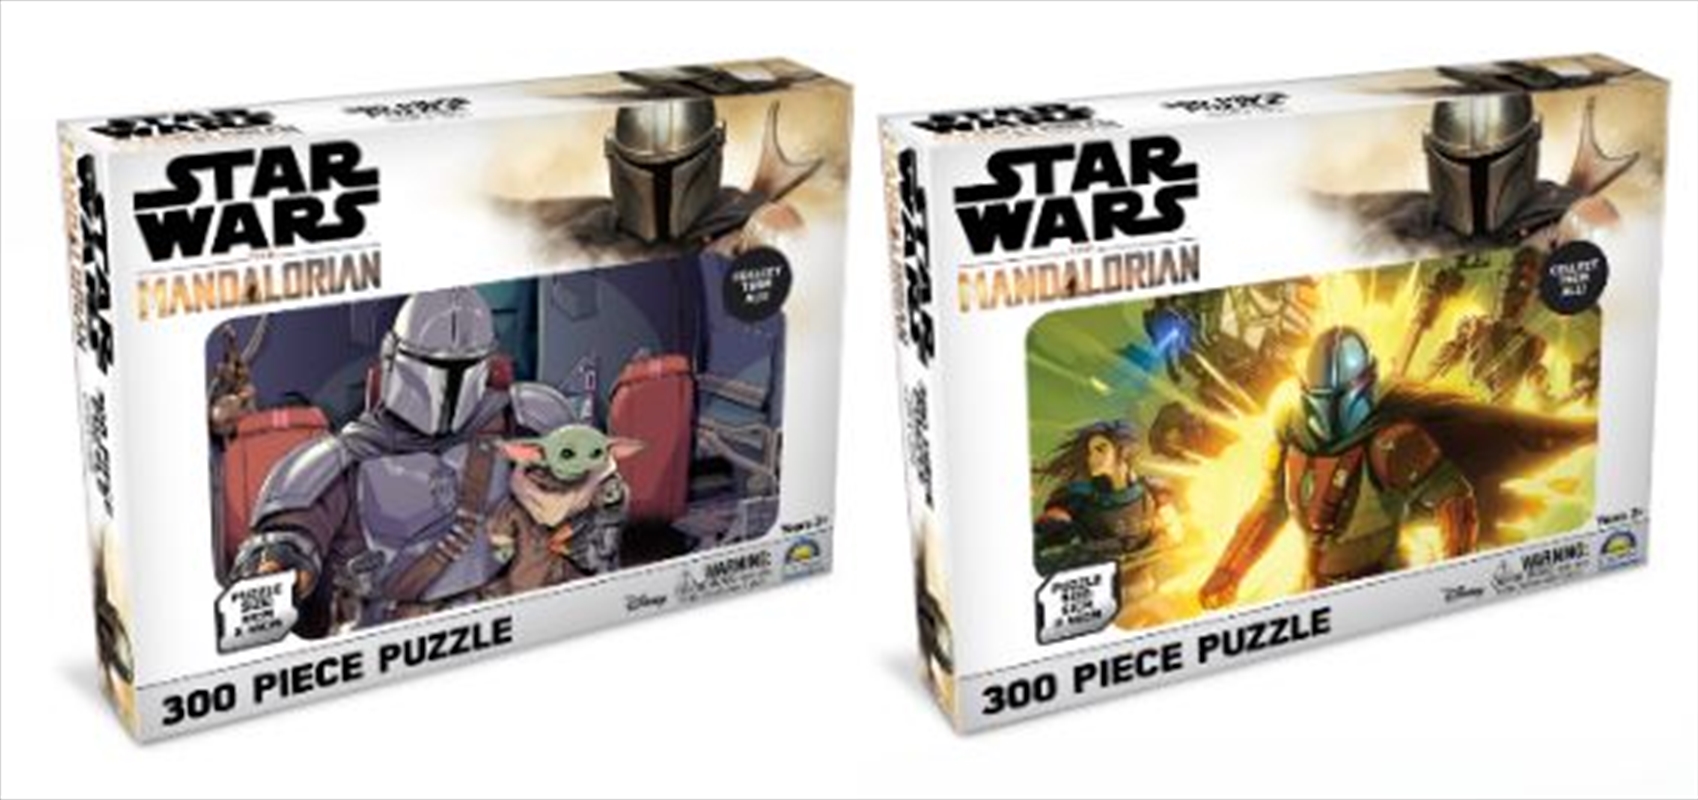 Star Wars - Mandalorian 300 Piece Puzzle (Assorted Design - Sent At Random) | Merchandise